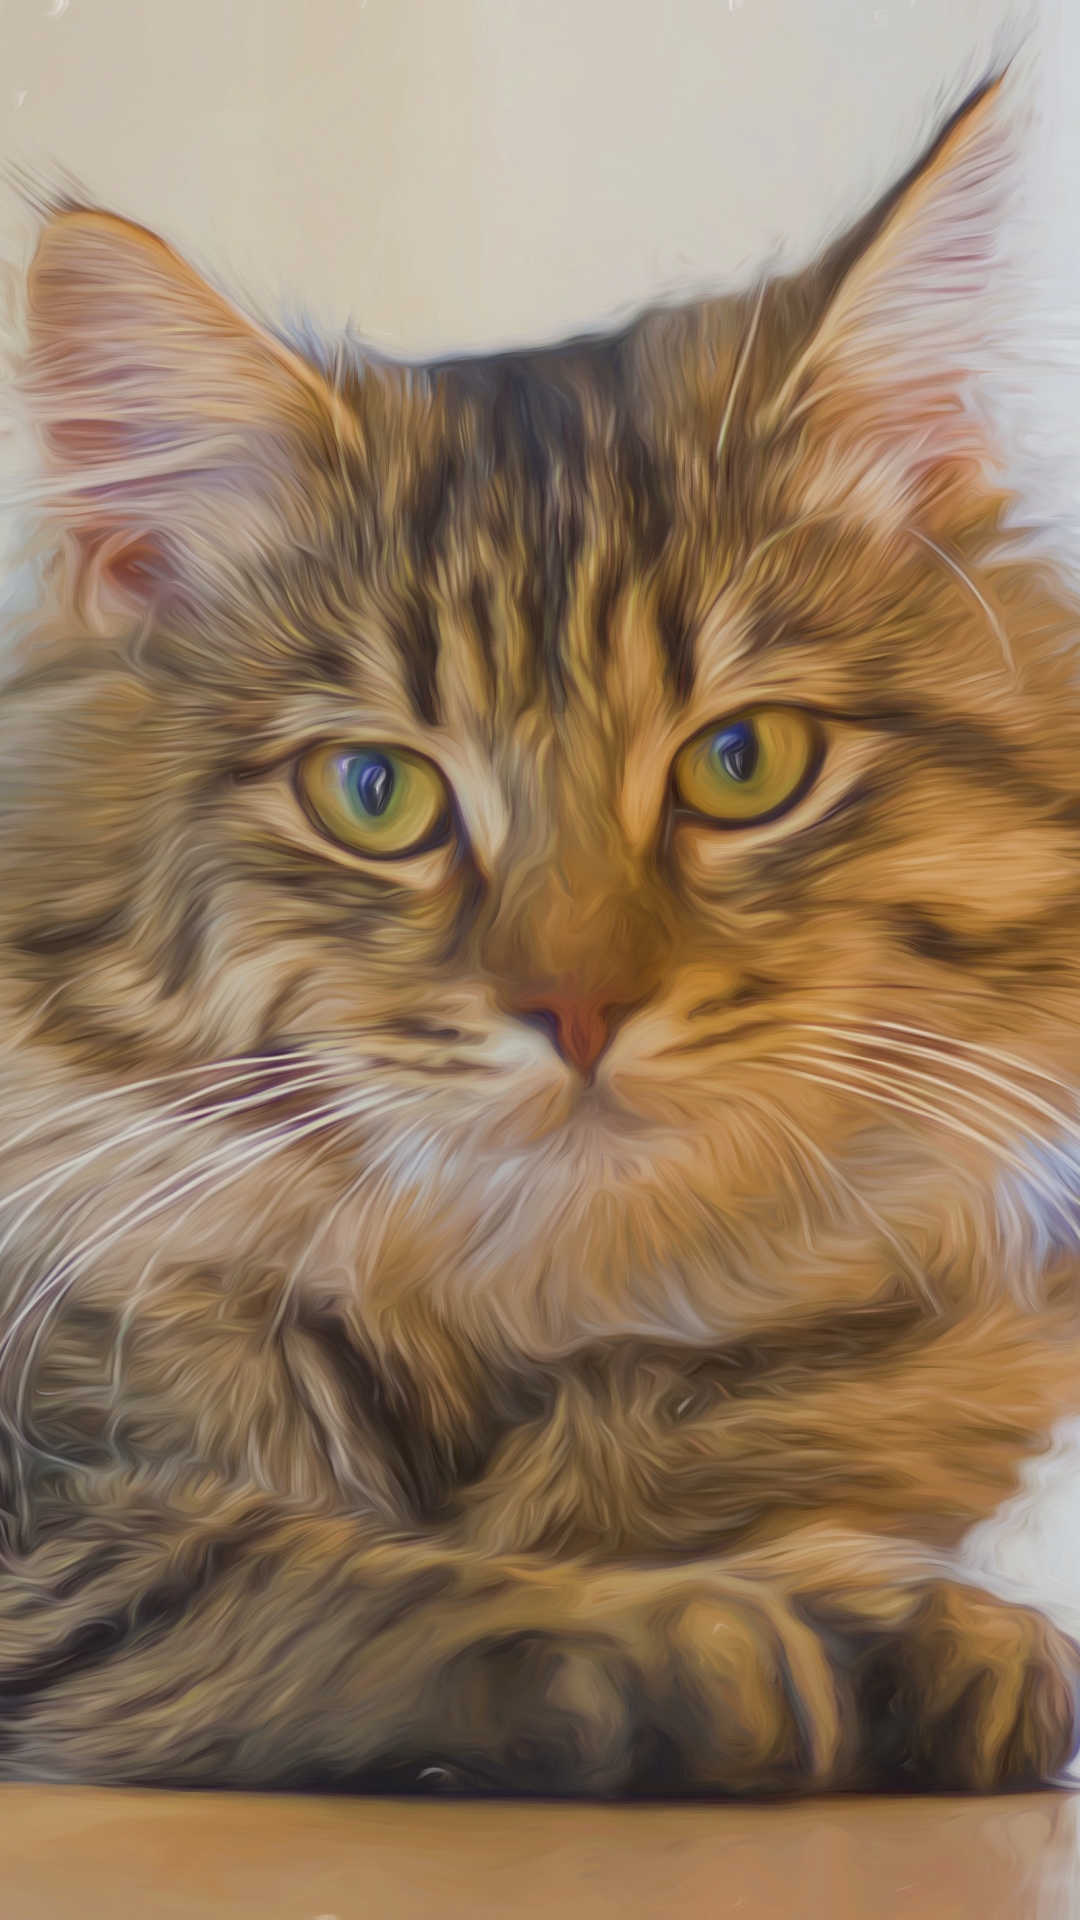 Descarga gratuita de fondo de pantalla para móvil de Animales, Gatos, Gato, Pintura, Cuadro, Pintura Al Óleo.